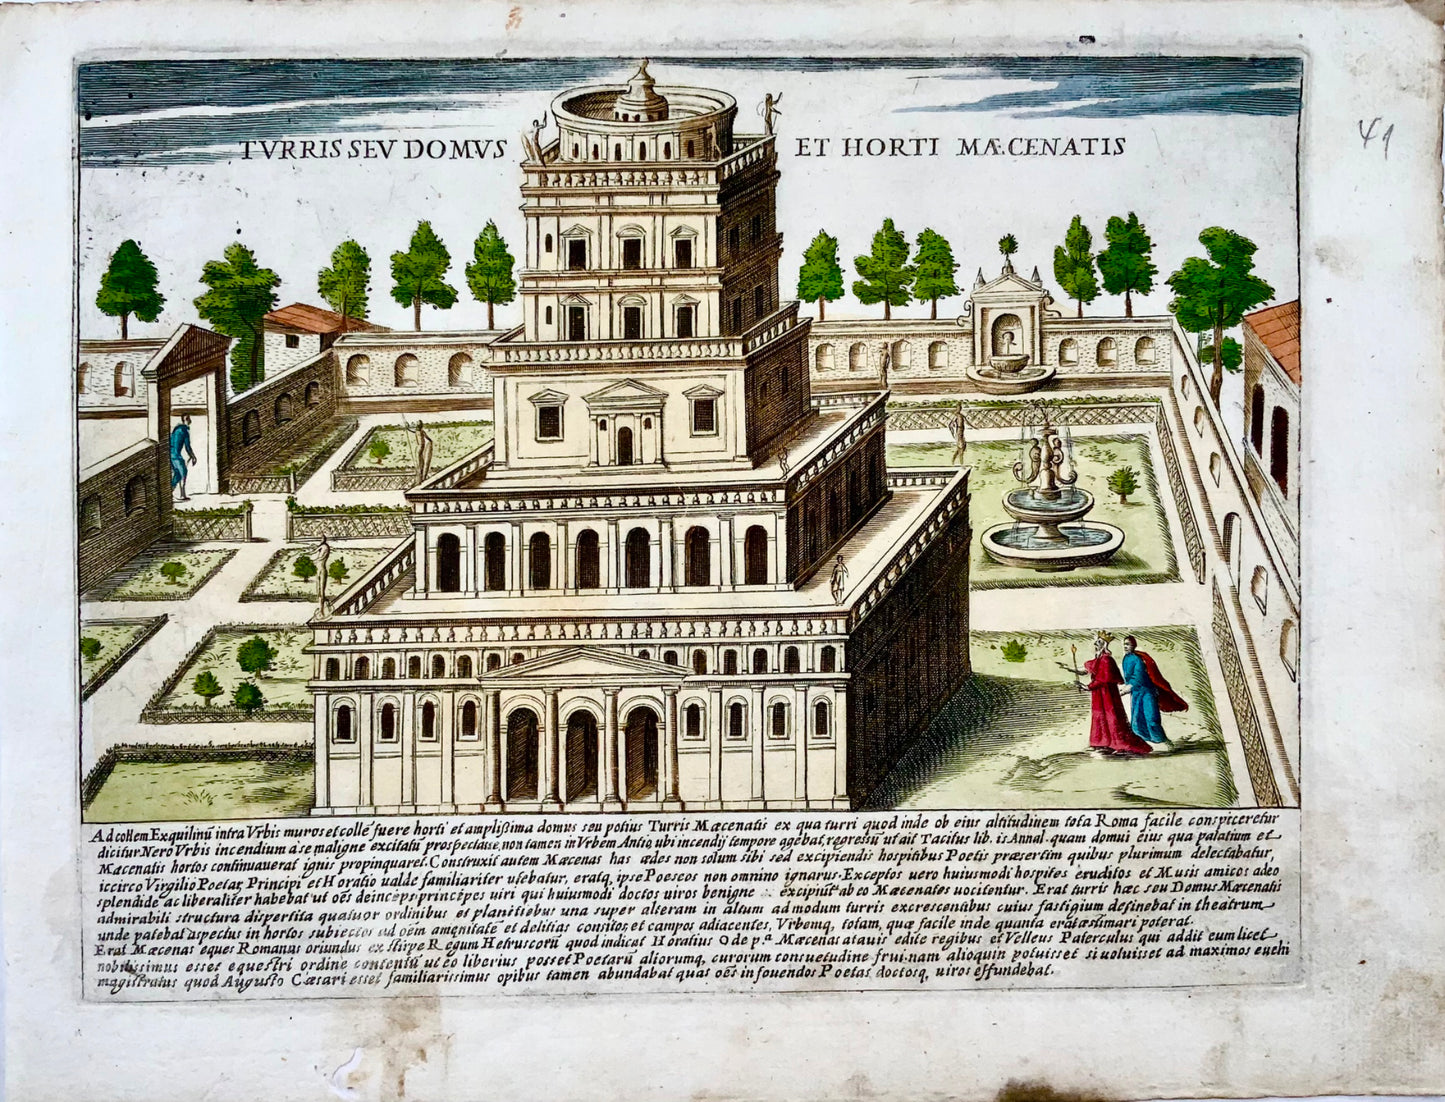 1624 G. Laurus, Gardens at Maecenas, Rome, Italy engraving